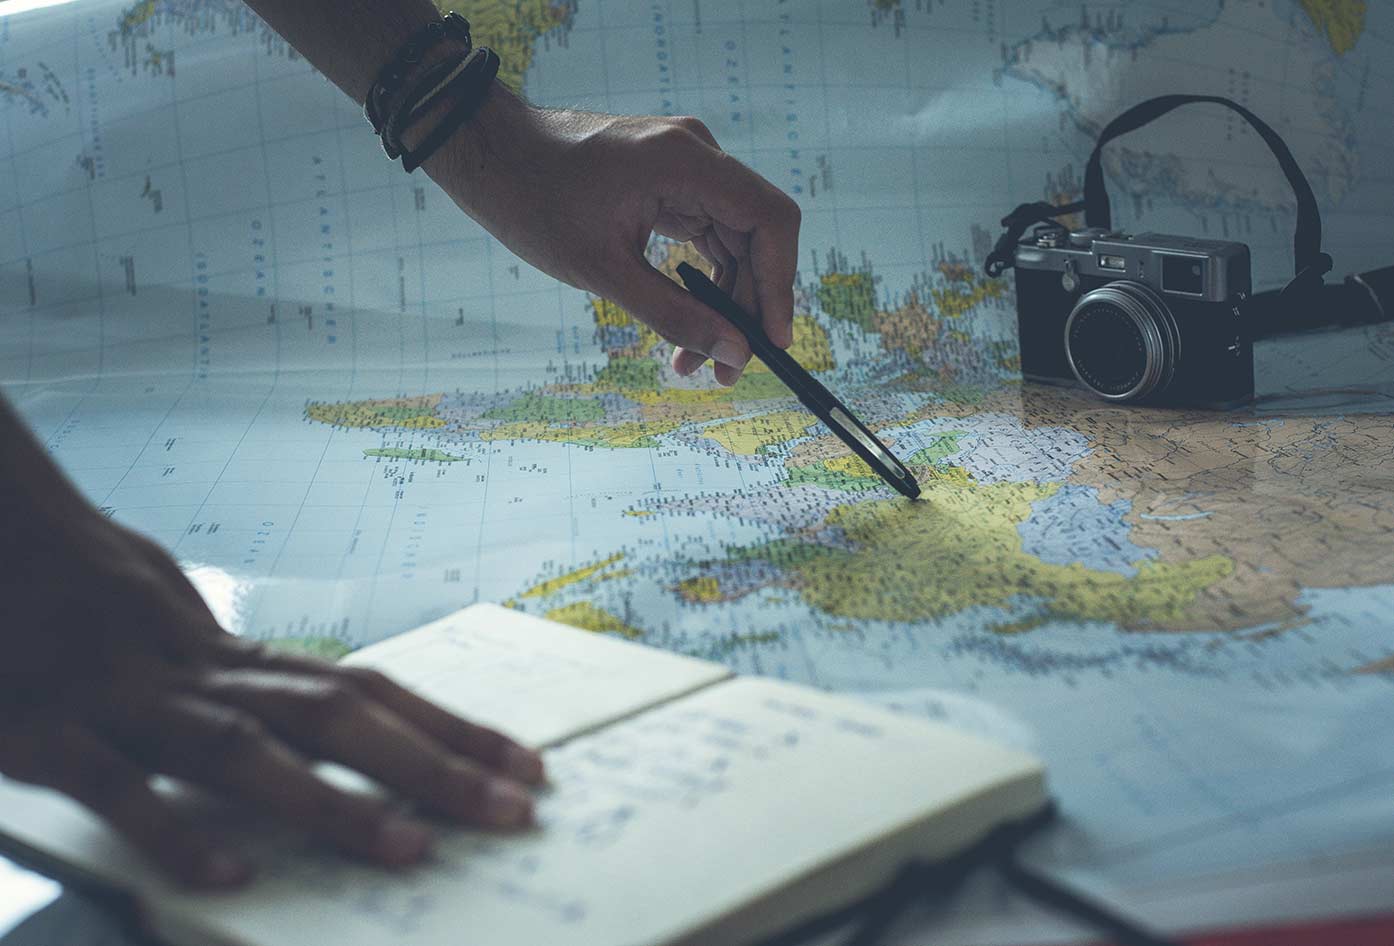 travel journal map